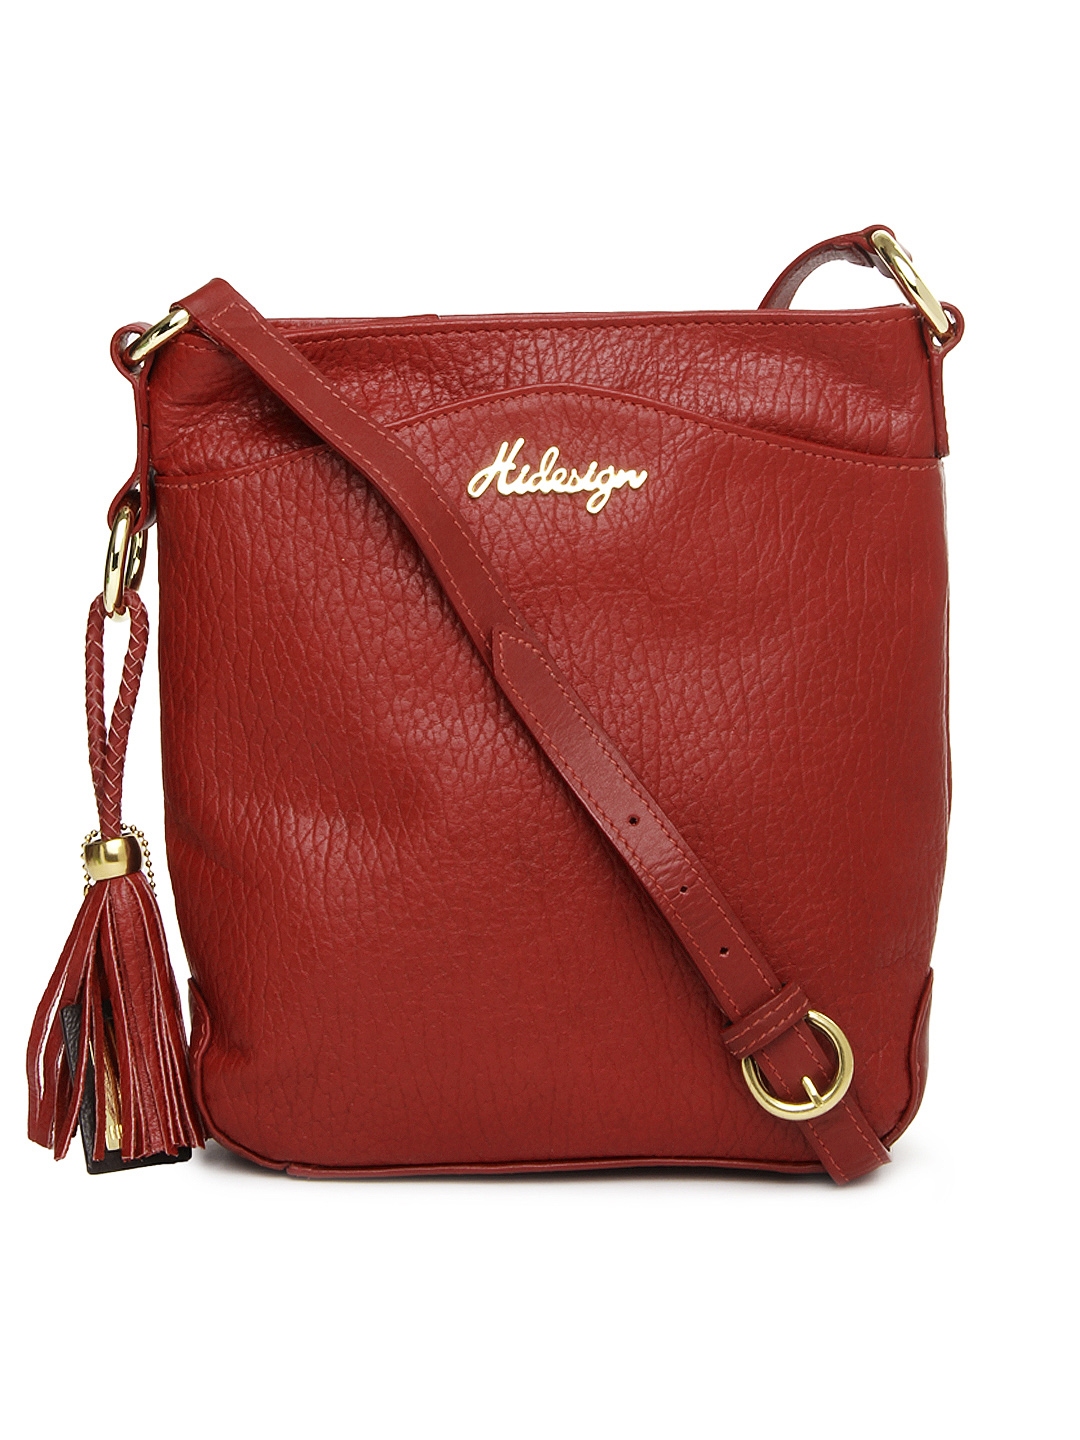 Buy Hidesign Red Leather Sling Bag - Handbags for Women 467706 | Myntra